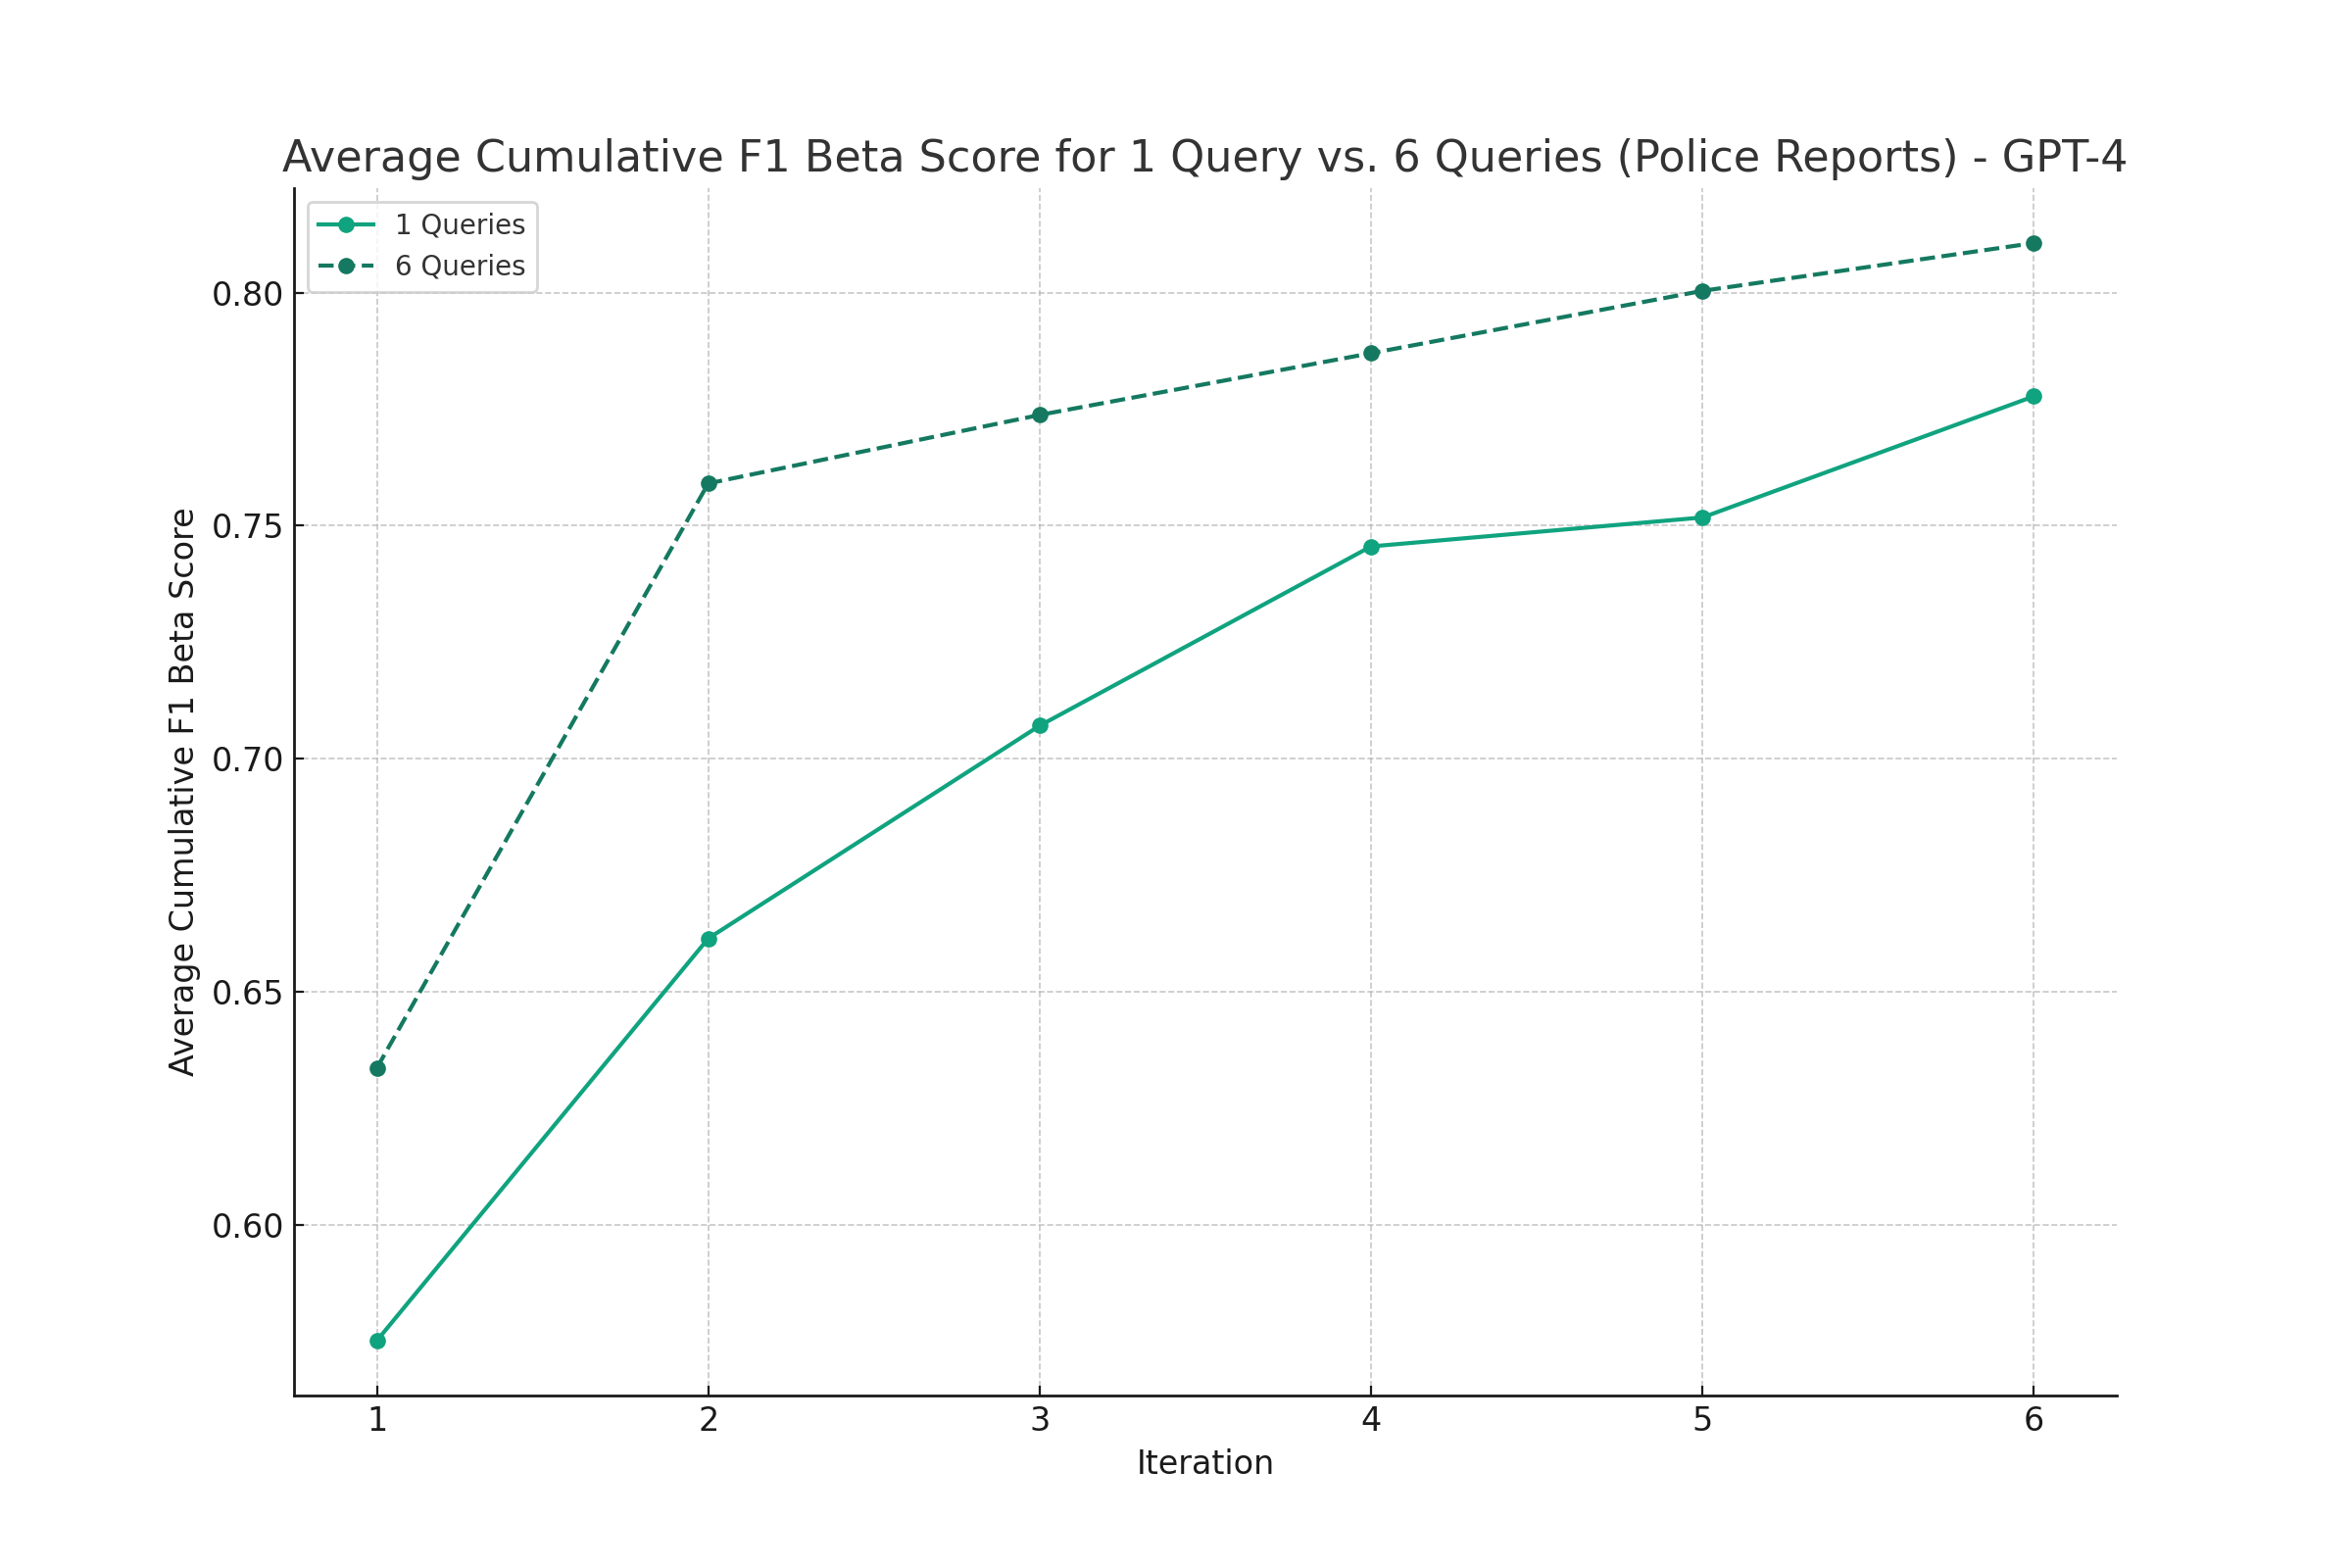 Figure 5: Average Cumulative F1 Beta Score for 1 Query vs. 6 Queries (Police Reports) - Model: GPT-4